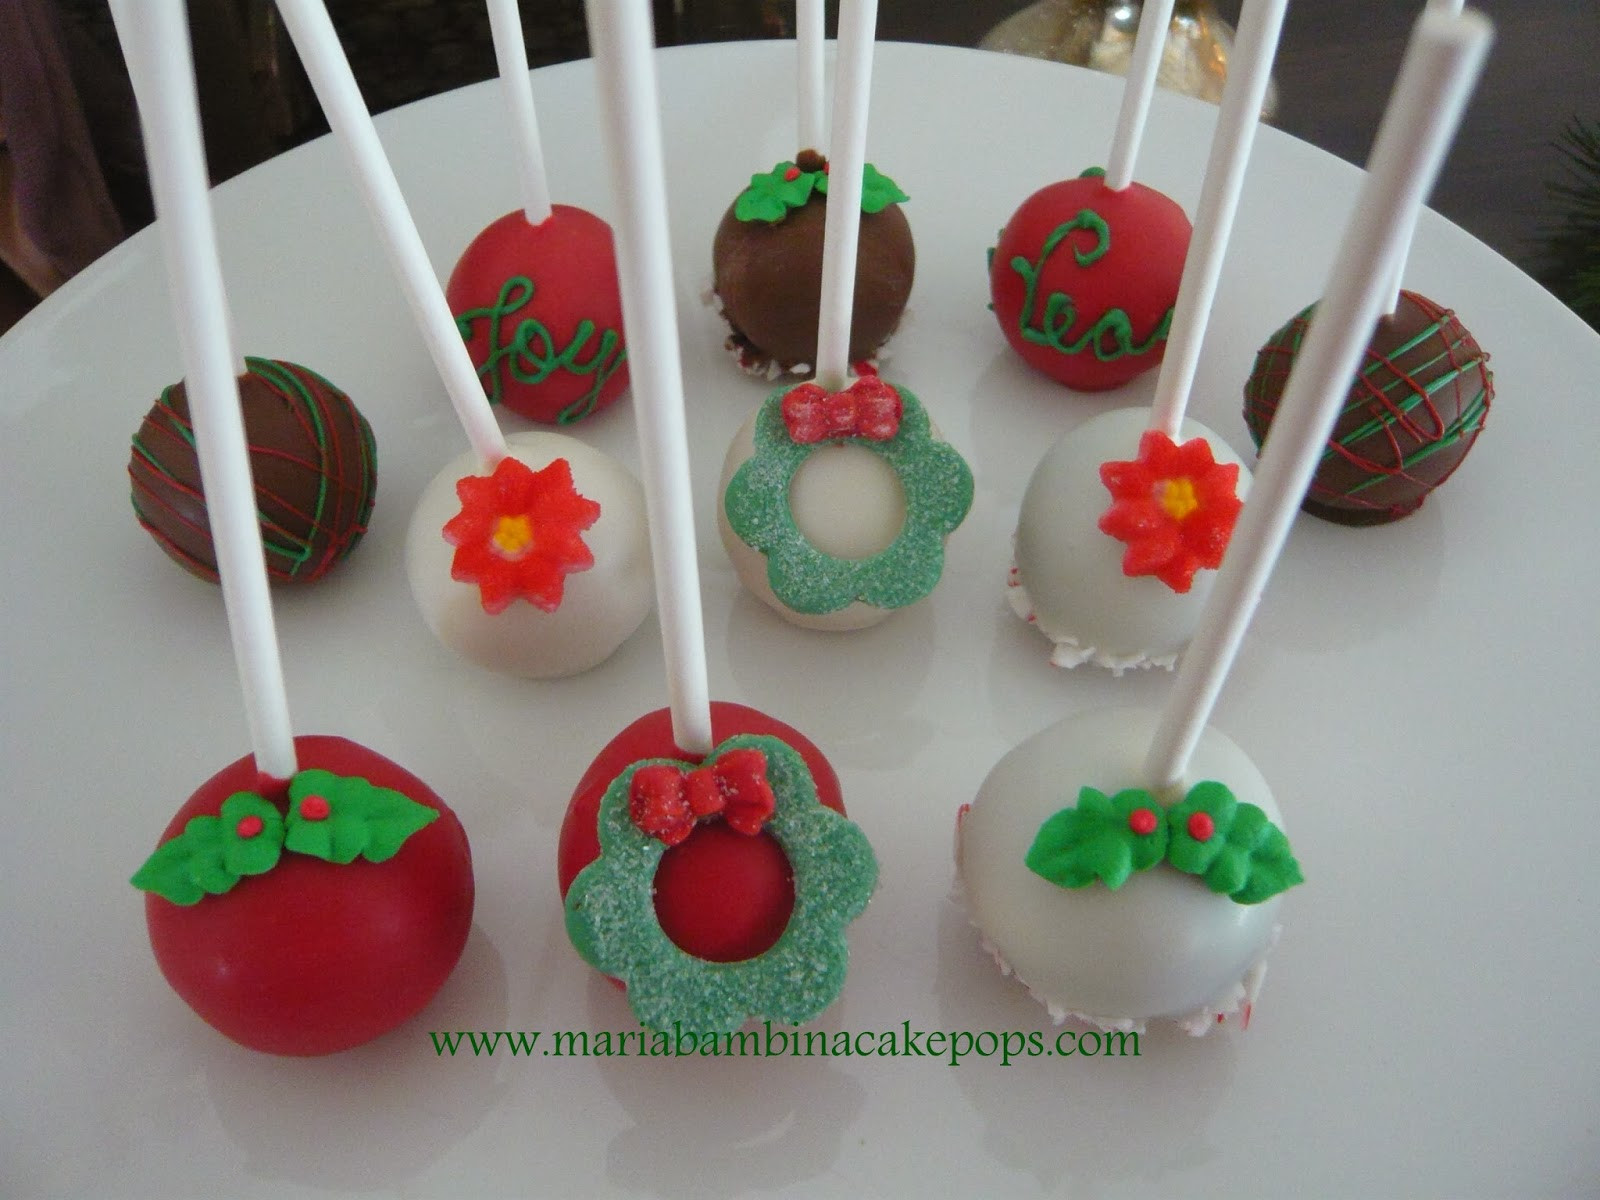 Christmas Cakes Flavors
 Maria Bambina cake pops and more Seasonal Flavors